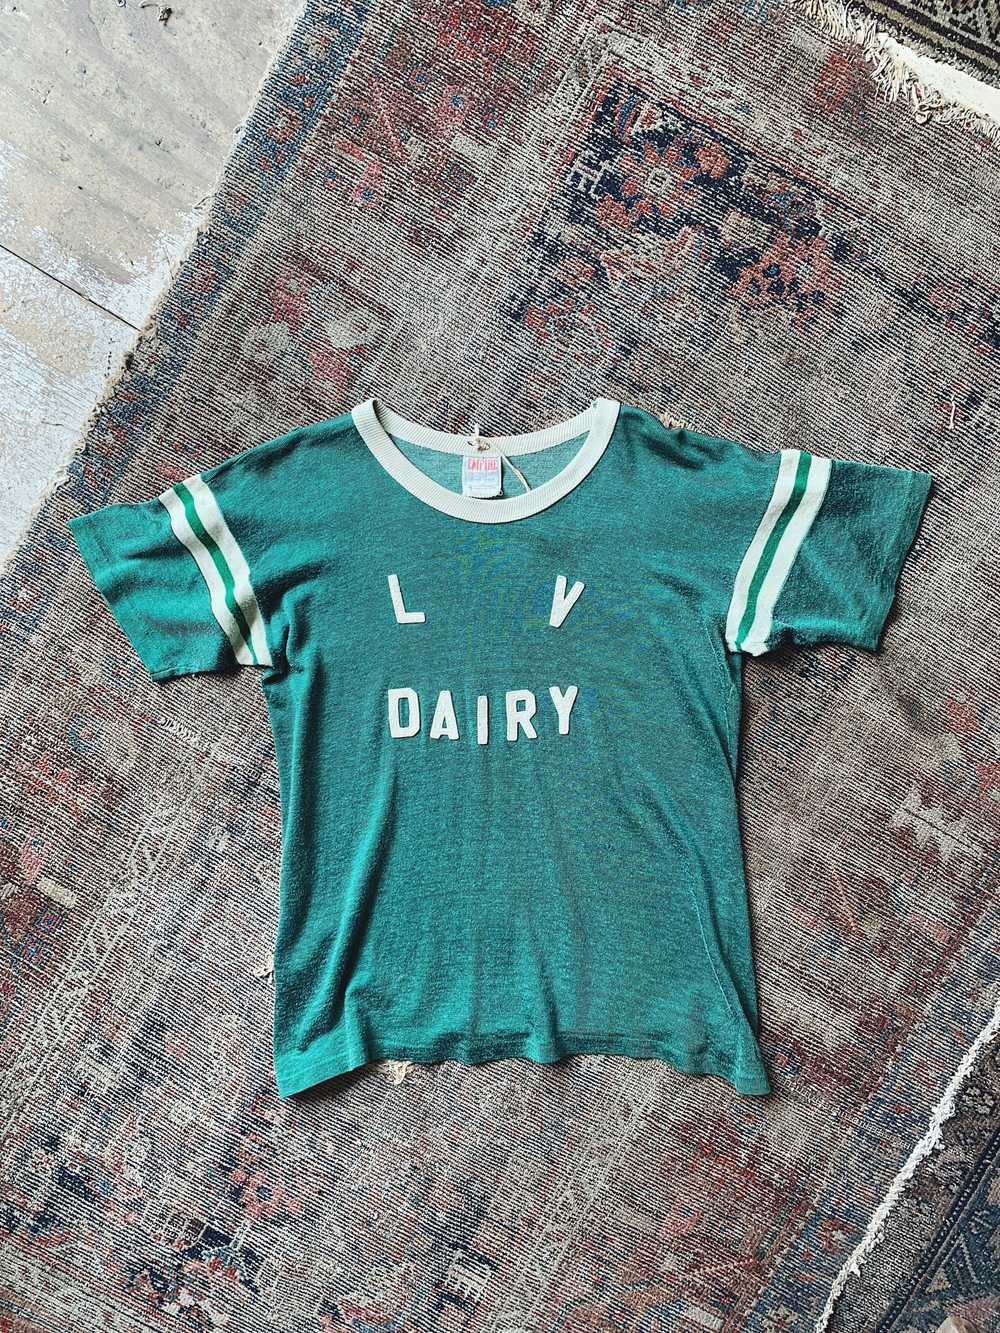 Vintage Empire Brand “LV Dairy” Jersey - image 1